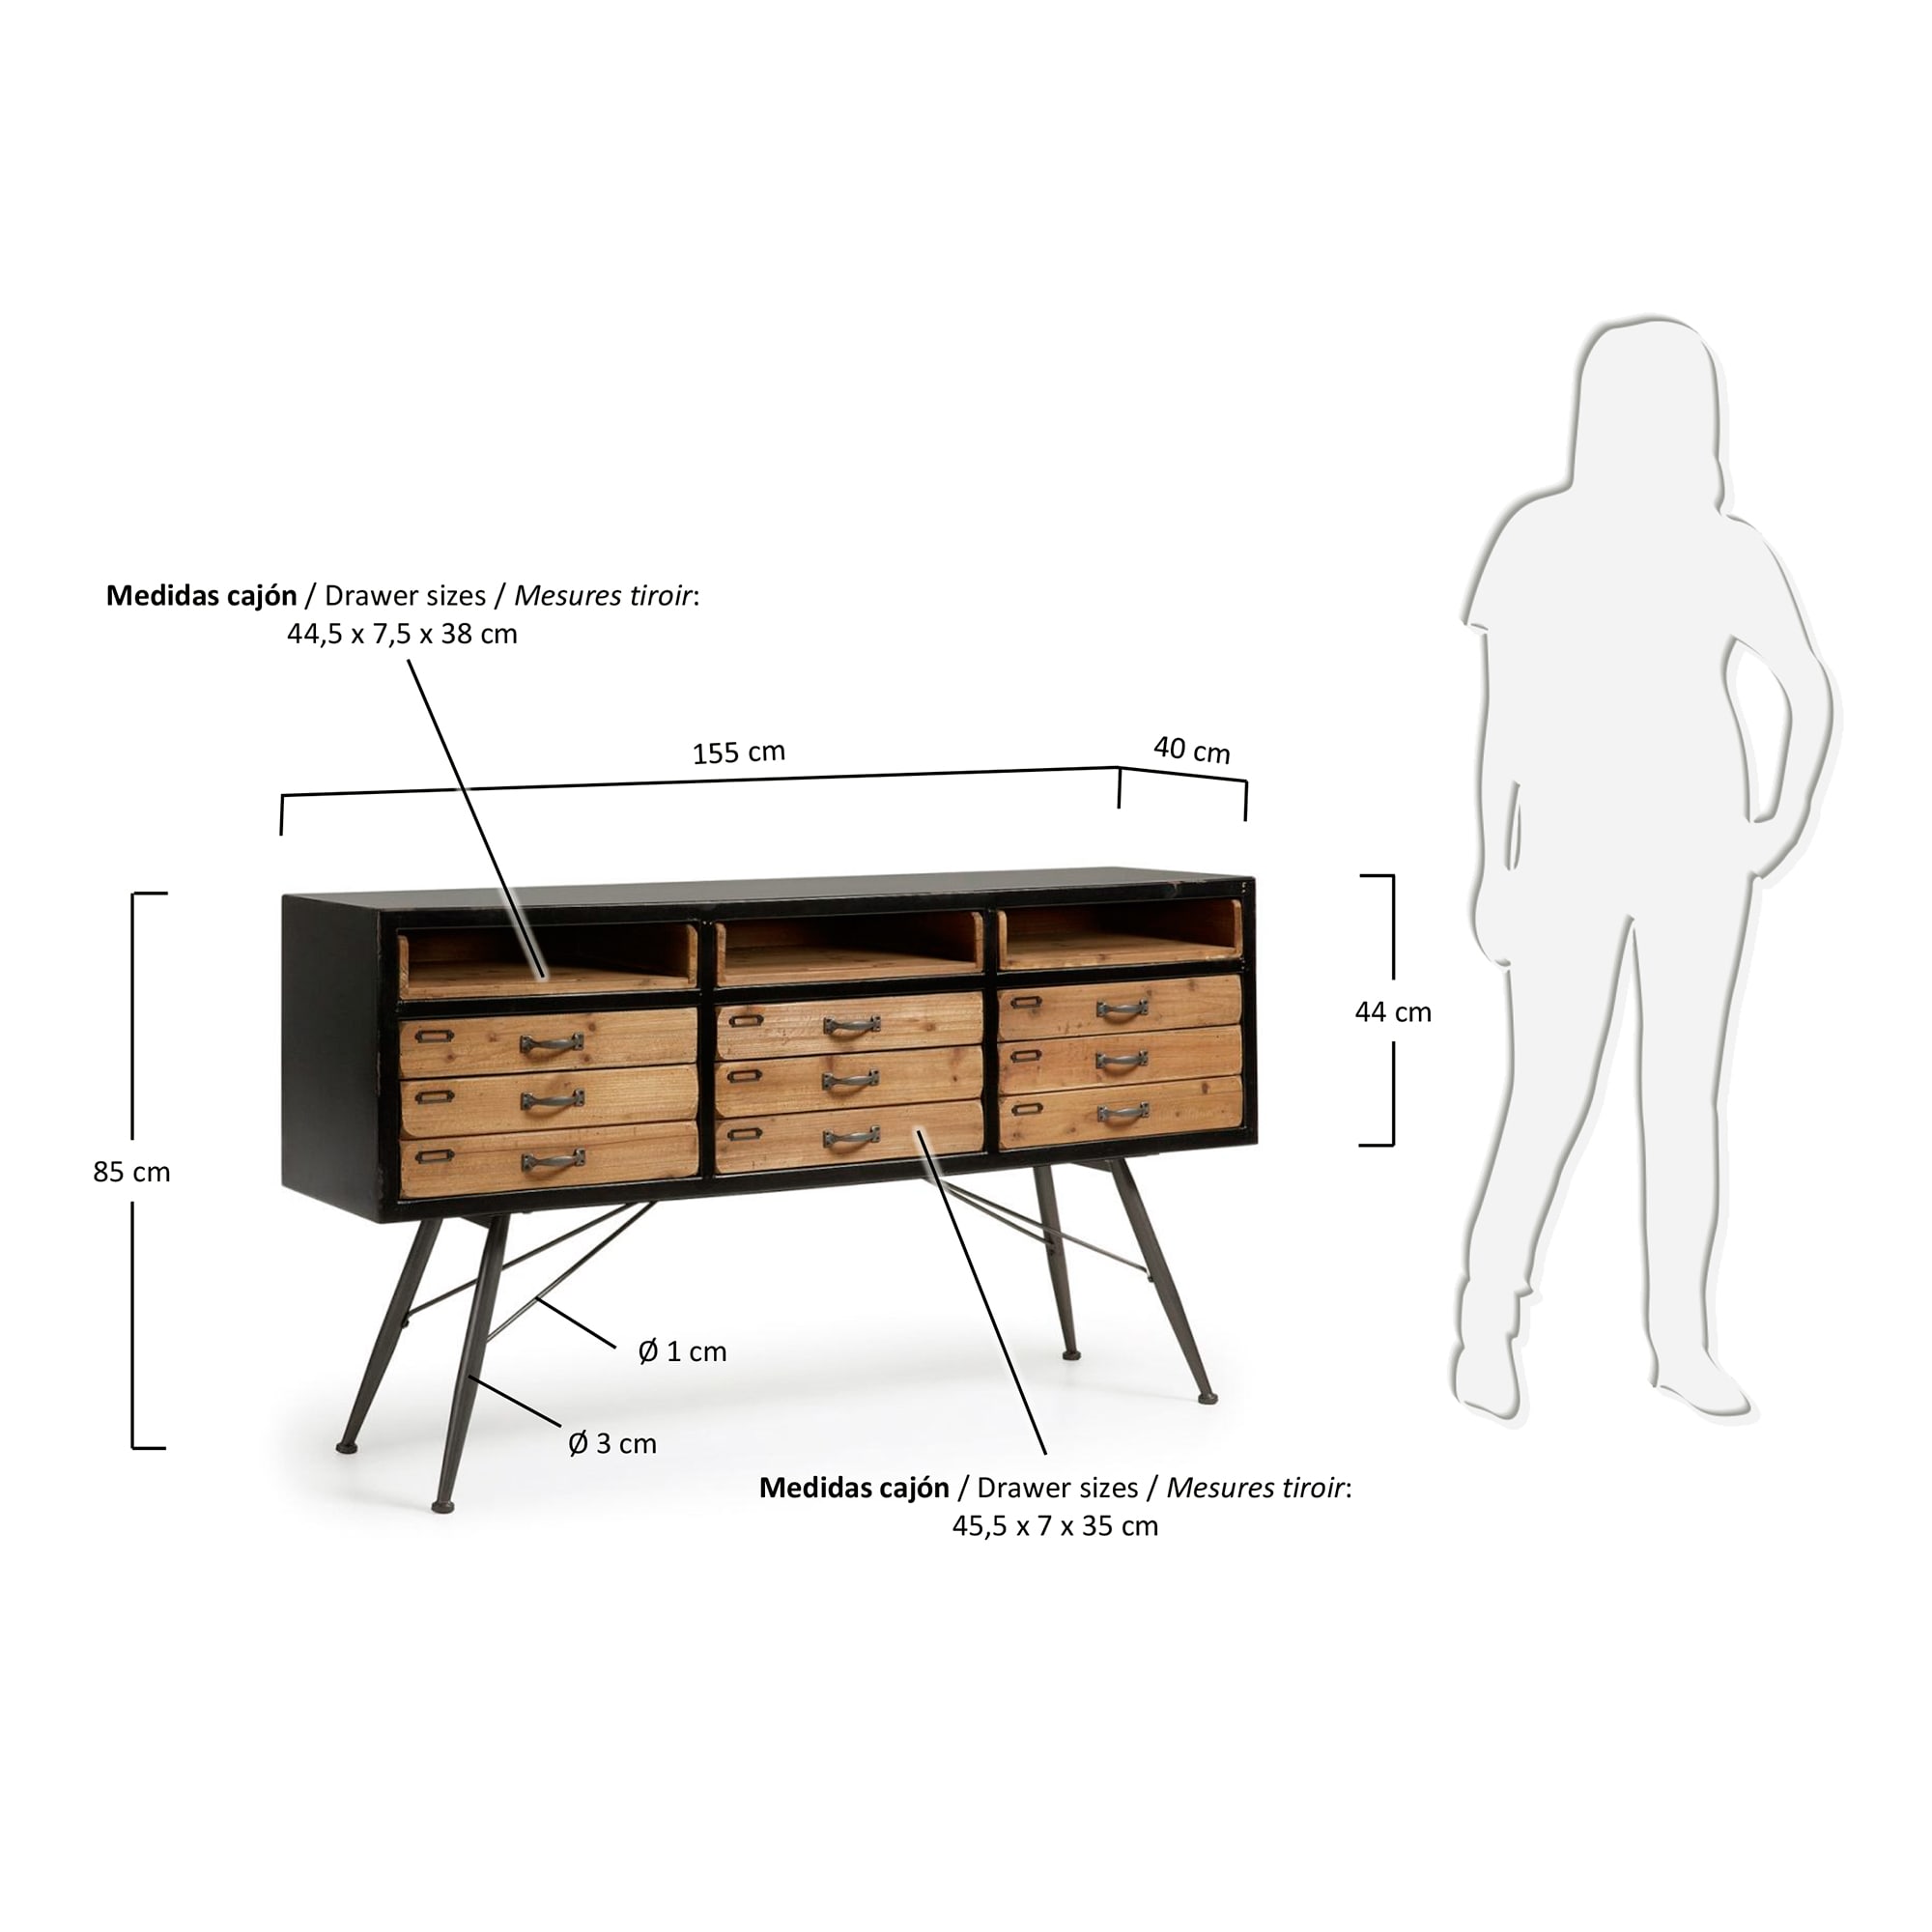 Refe sideboard 155 x 85 cm - sizes